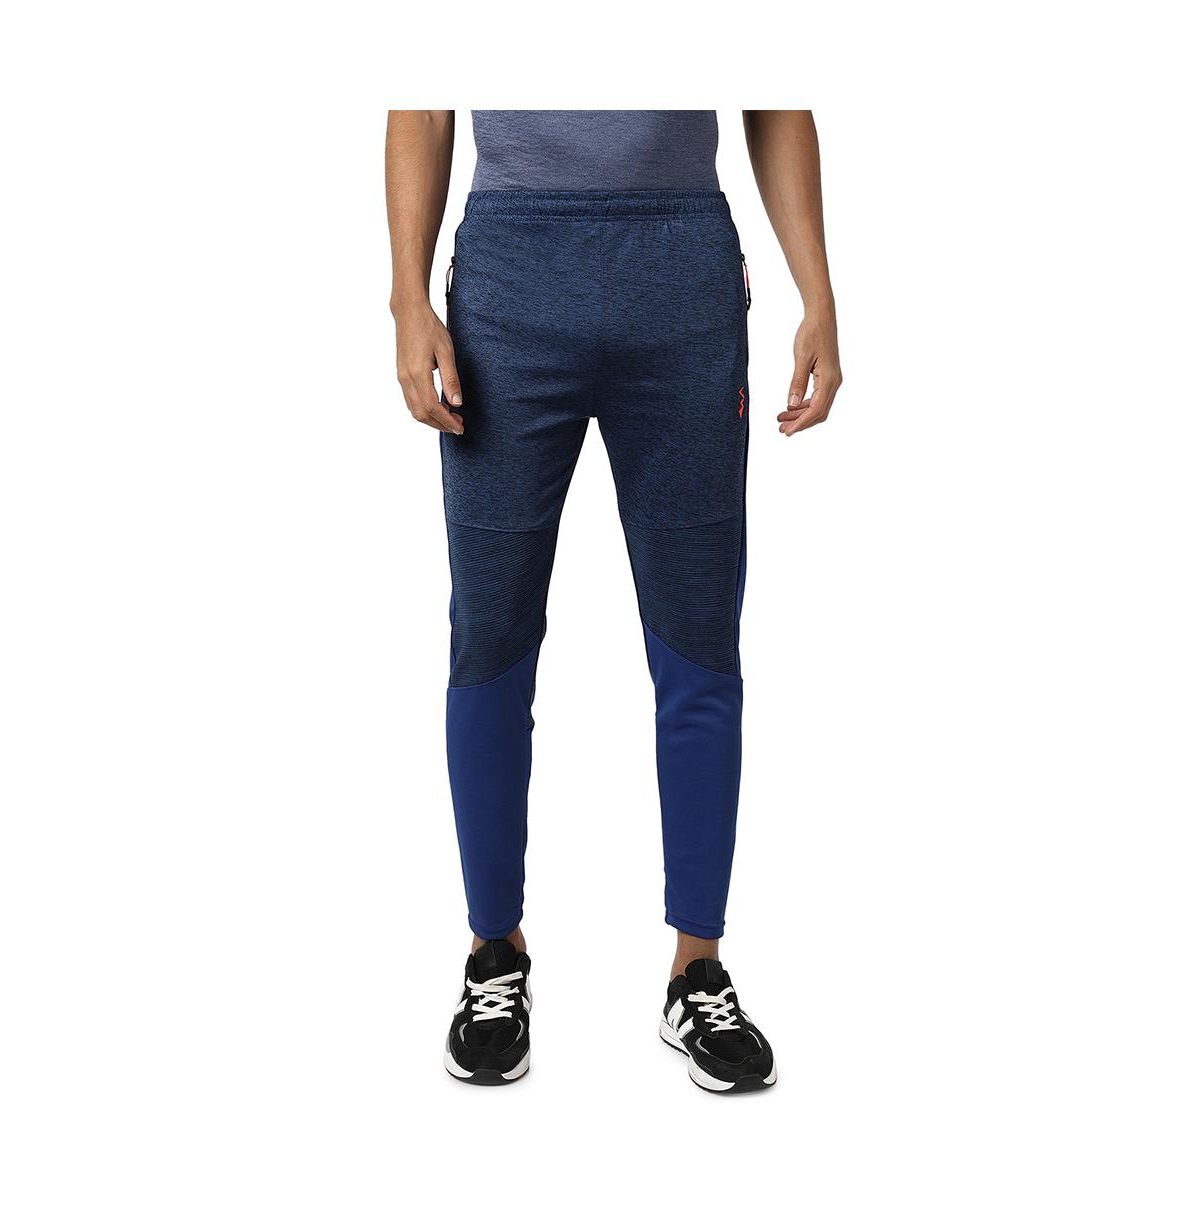 Men's Indigo Blue Side-Striped Track pants - Indigo blue